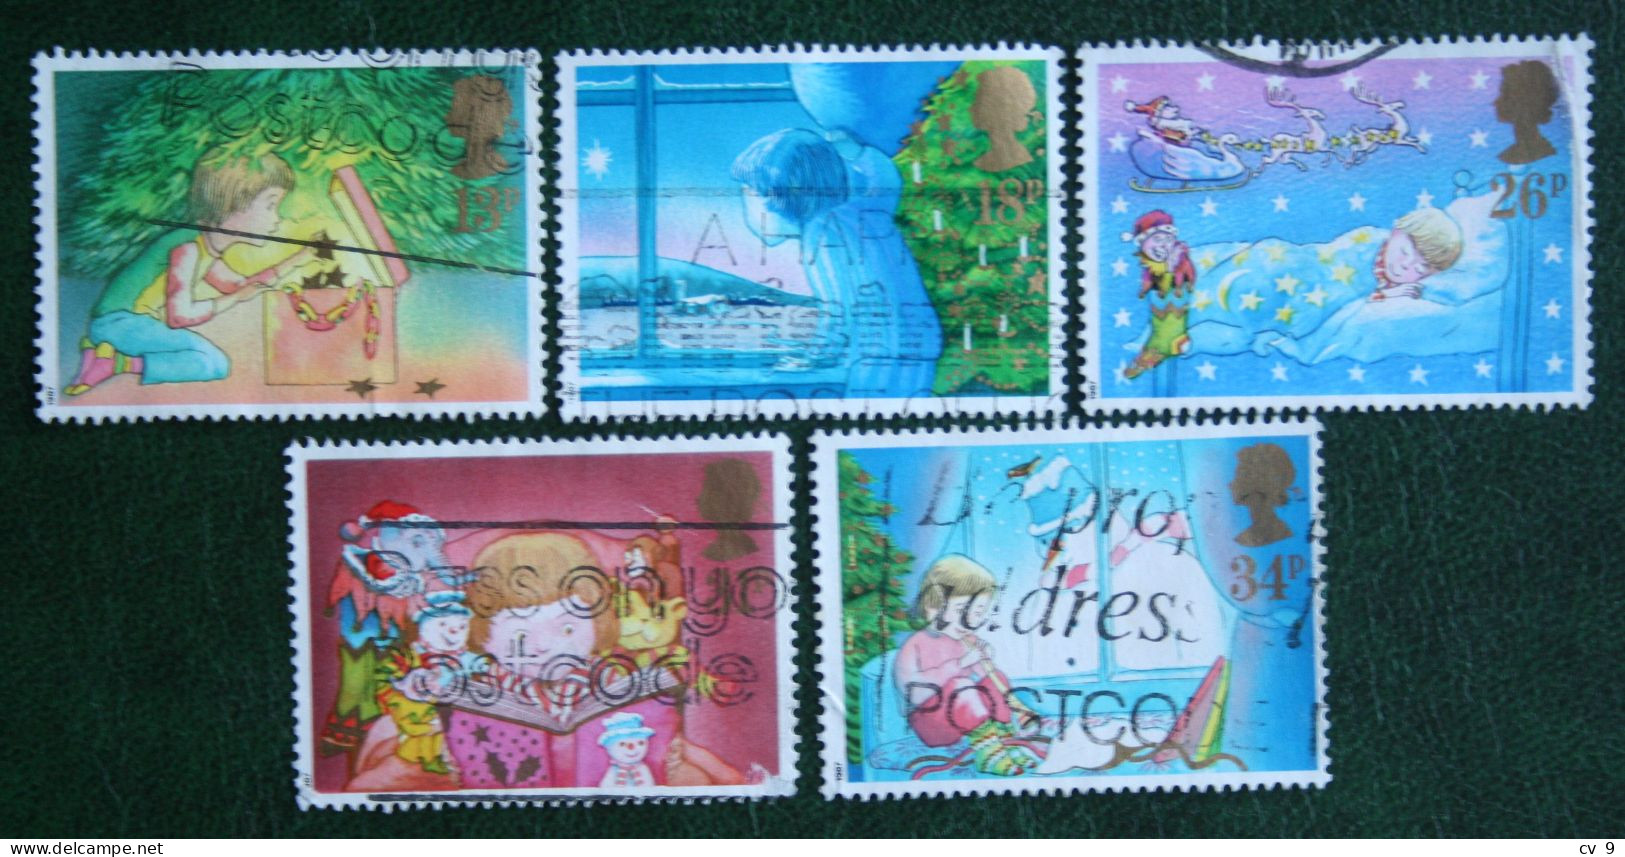 Natale Weihnachten Xmas Noel Kerst (Mi 1126-1130) 1987 Used Gebruikt Oblitere ENGLAND GRANDE-BRETAGNE GB GREAT BRITAIN - Used Stamps